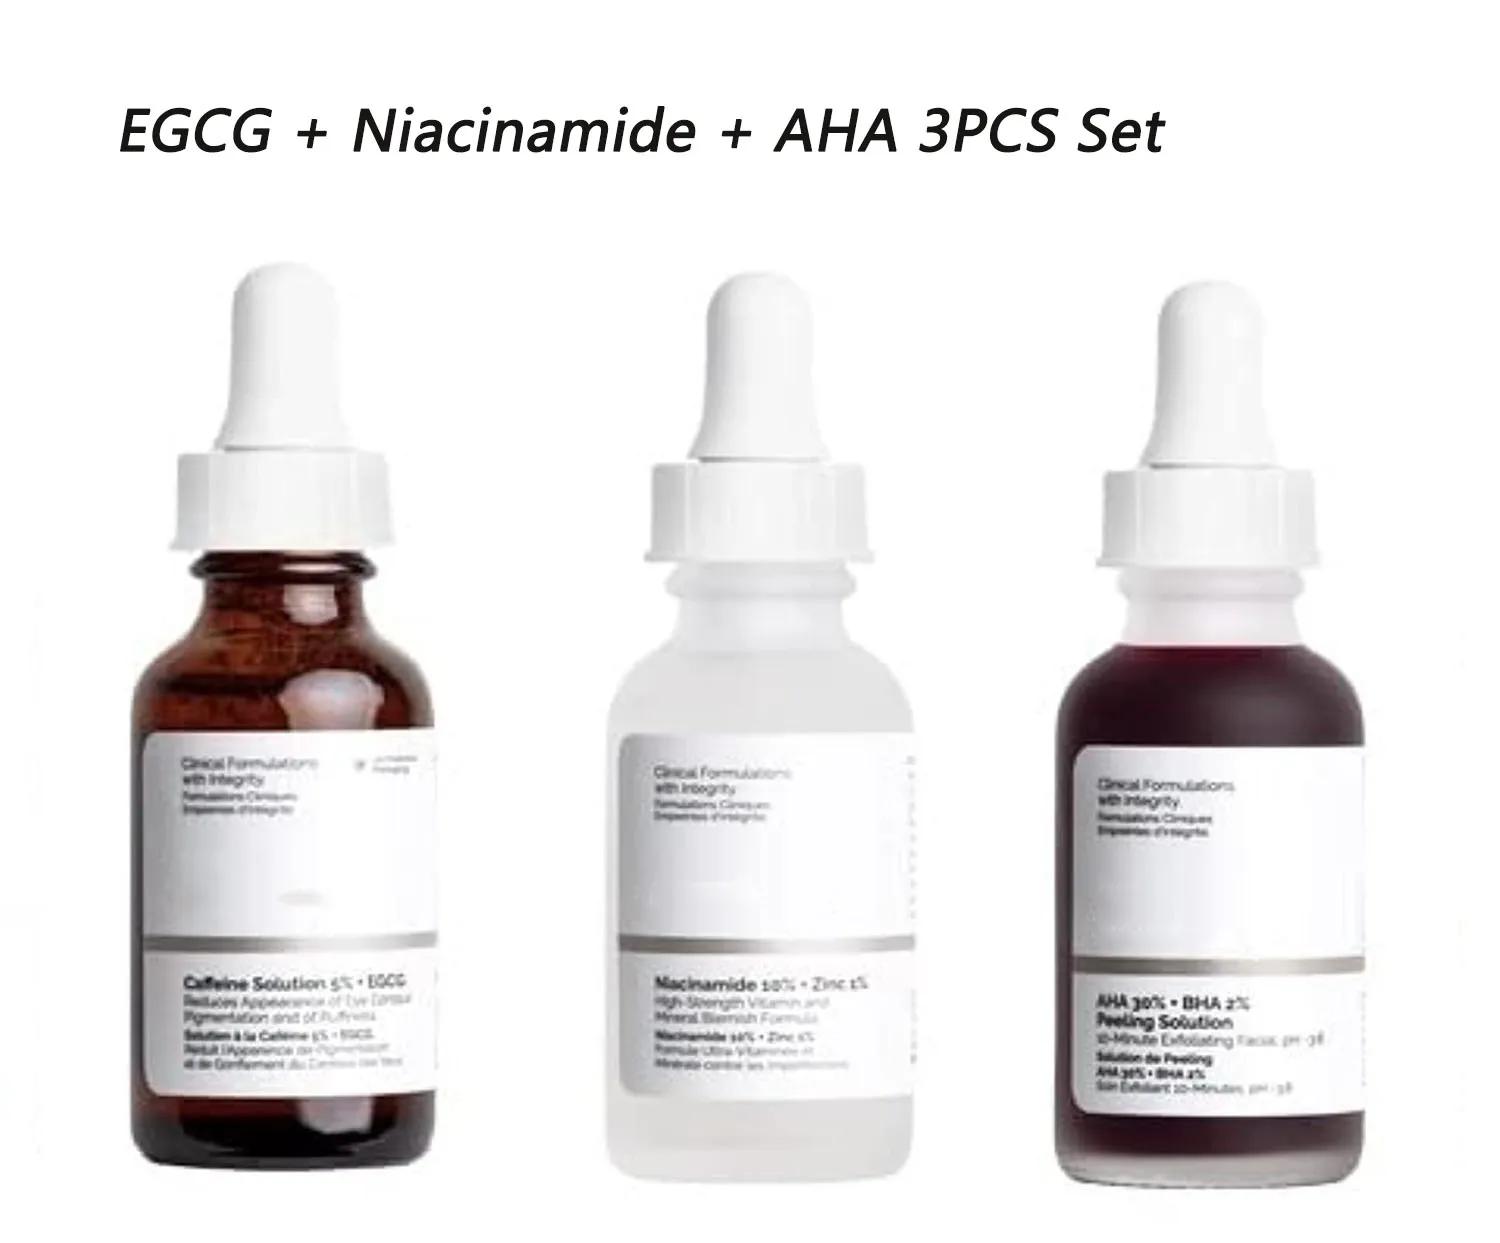 

EGCG+Niacinamide+AHA 30% BHA 2% Essence Suit Help Improve Roughness Refreshing Moisturizing And Shrinking Pores Skin Tightening